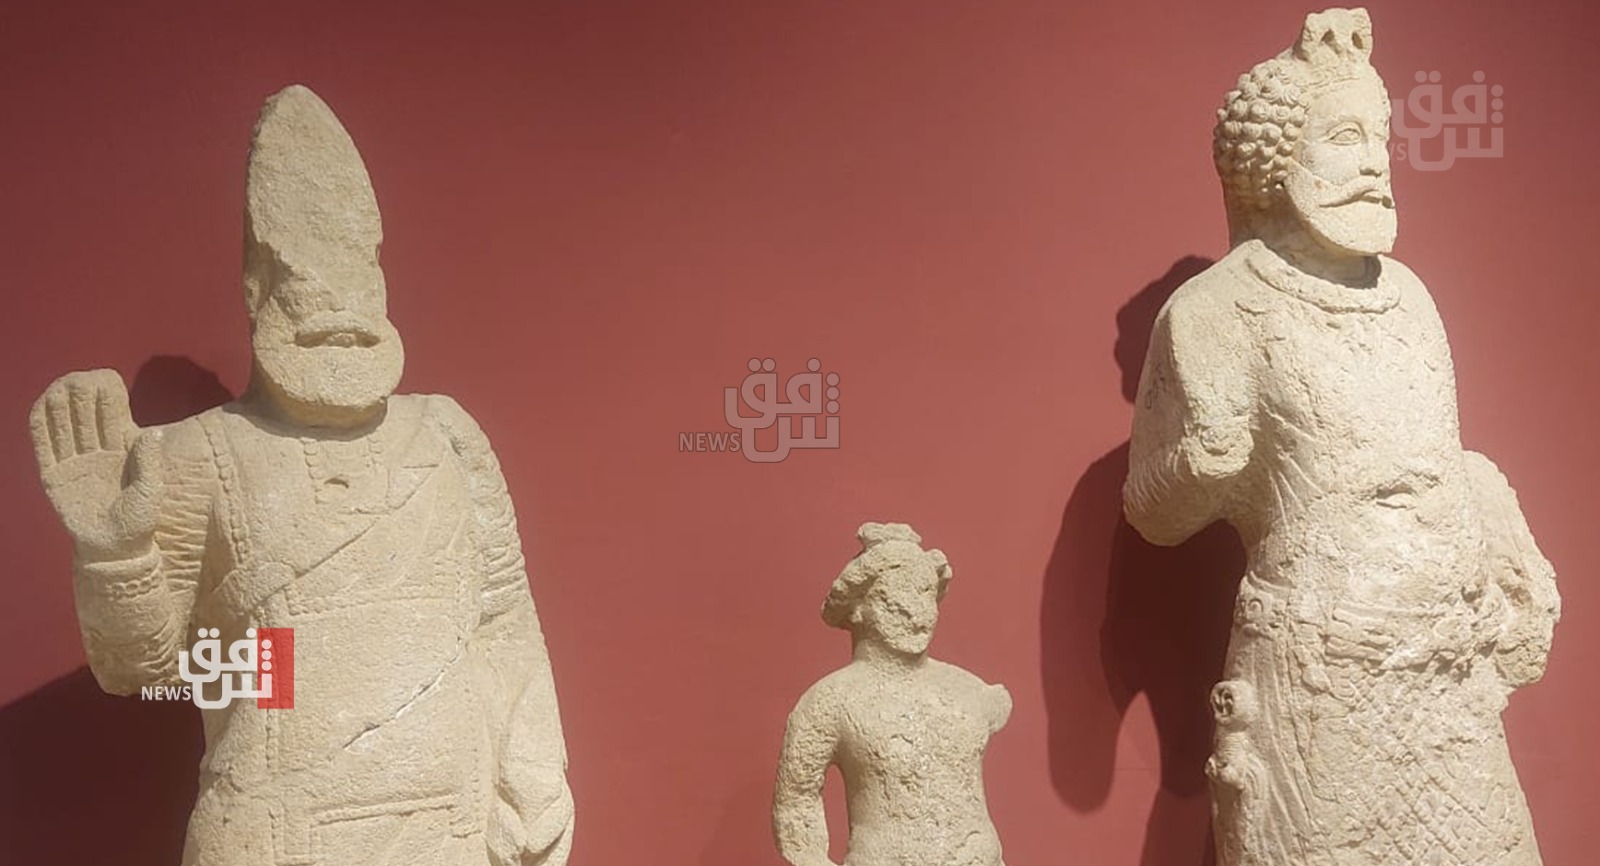 British Museum heist raises concerns over missing Iraqi artifacts